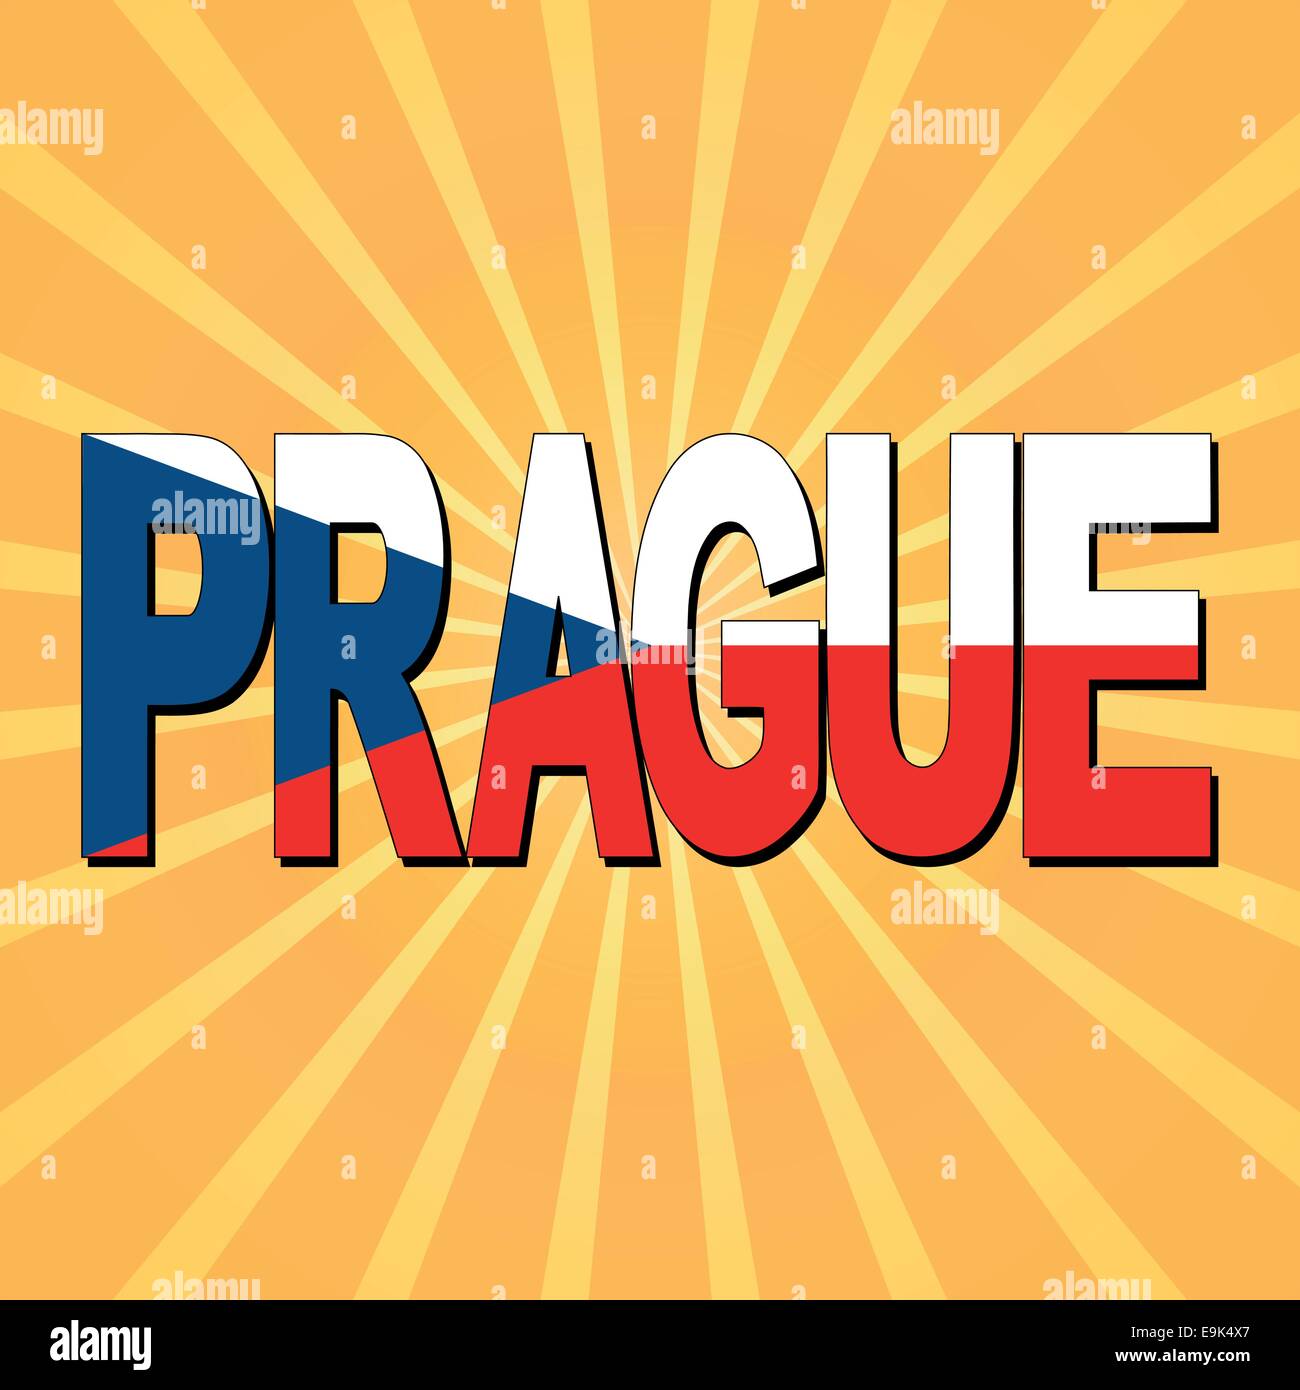 Prague flag text with sunburst illustration Stock Vector